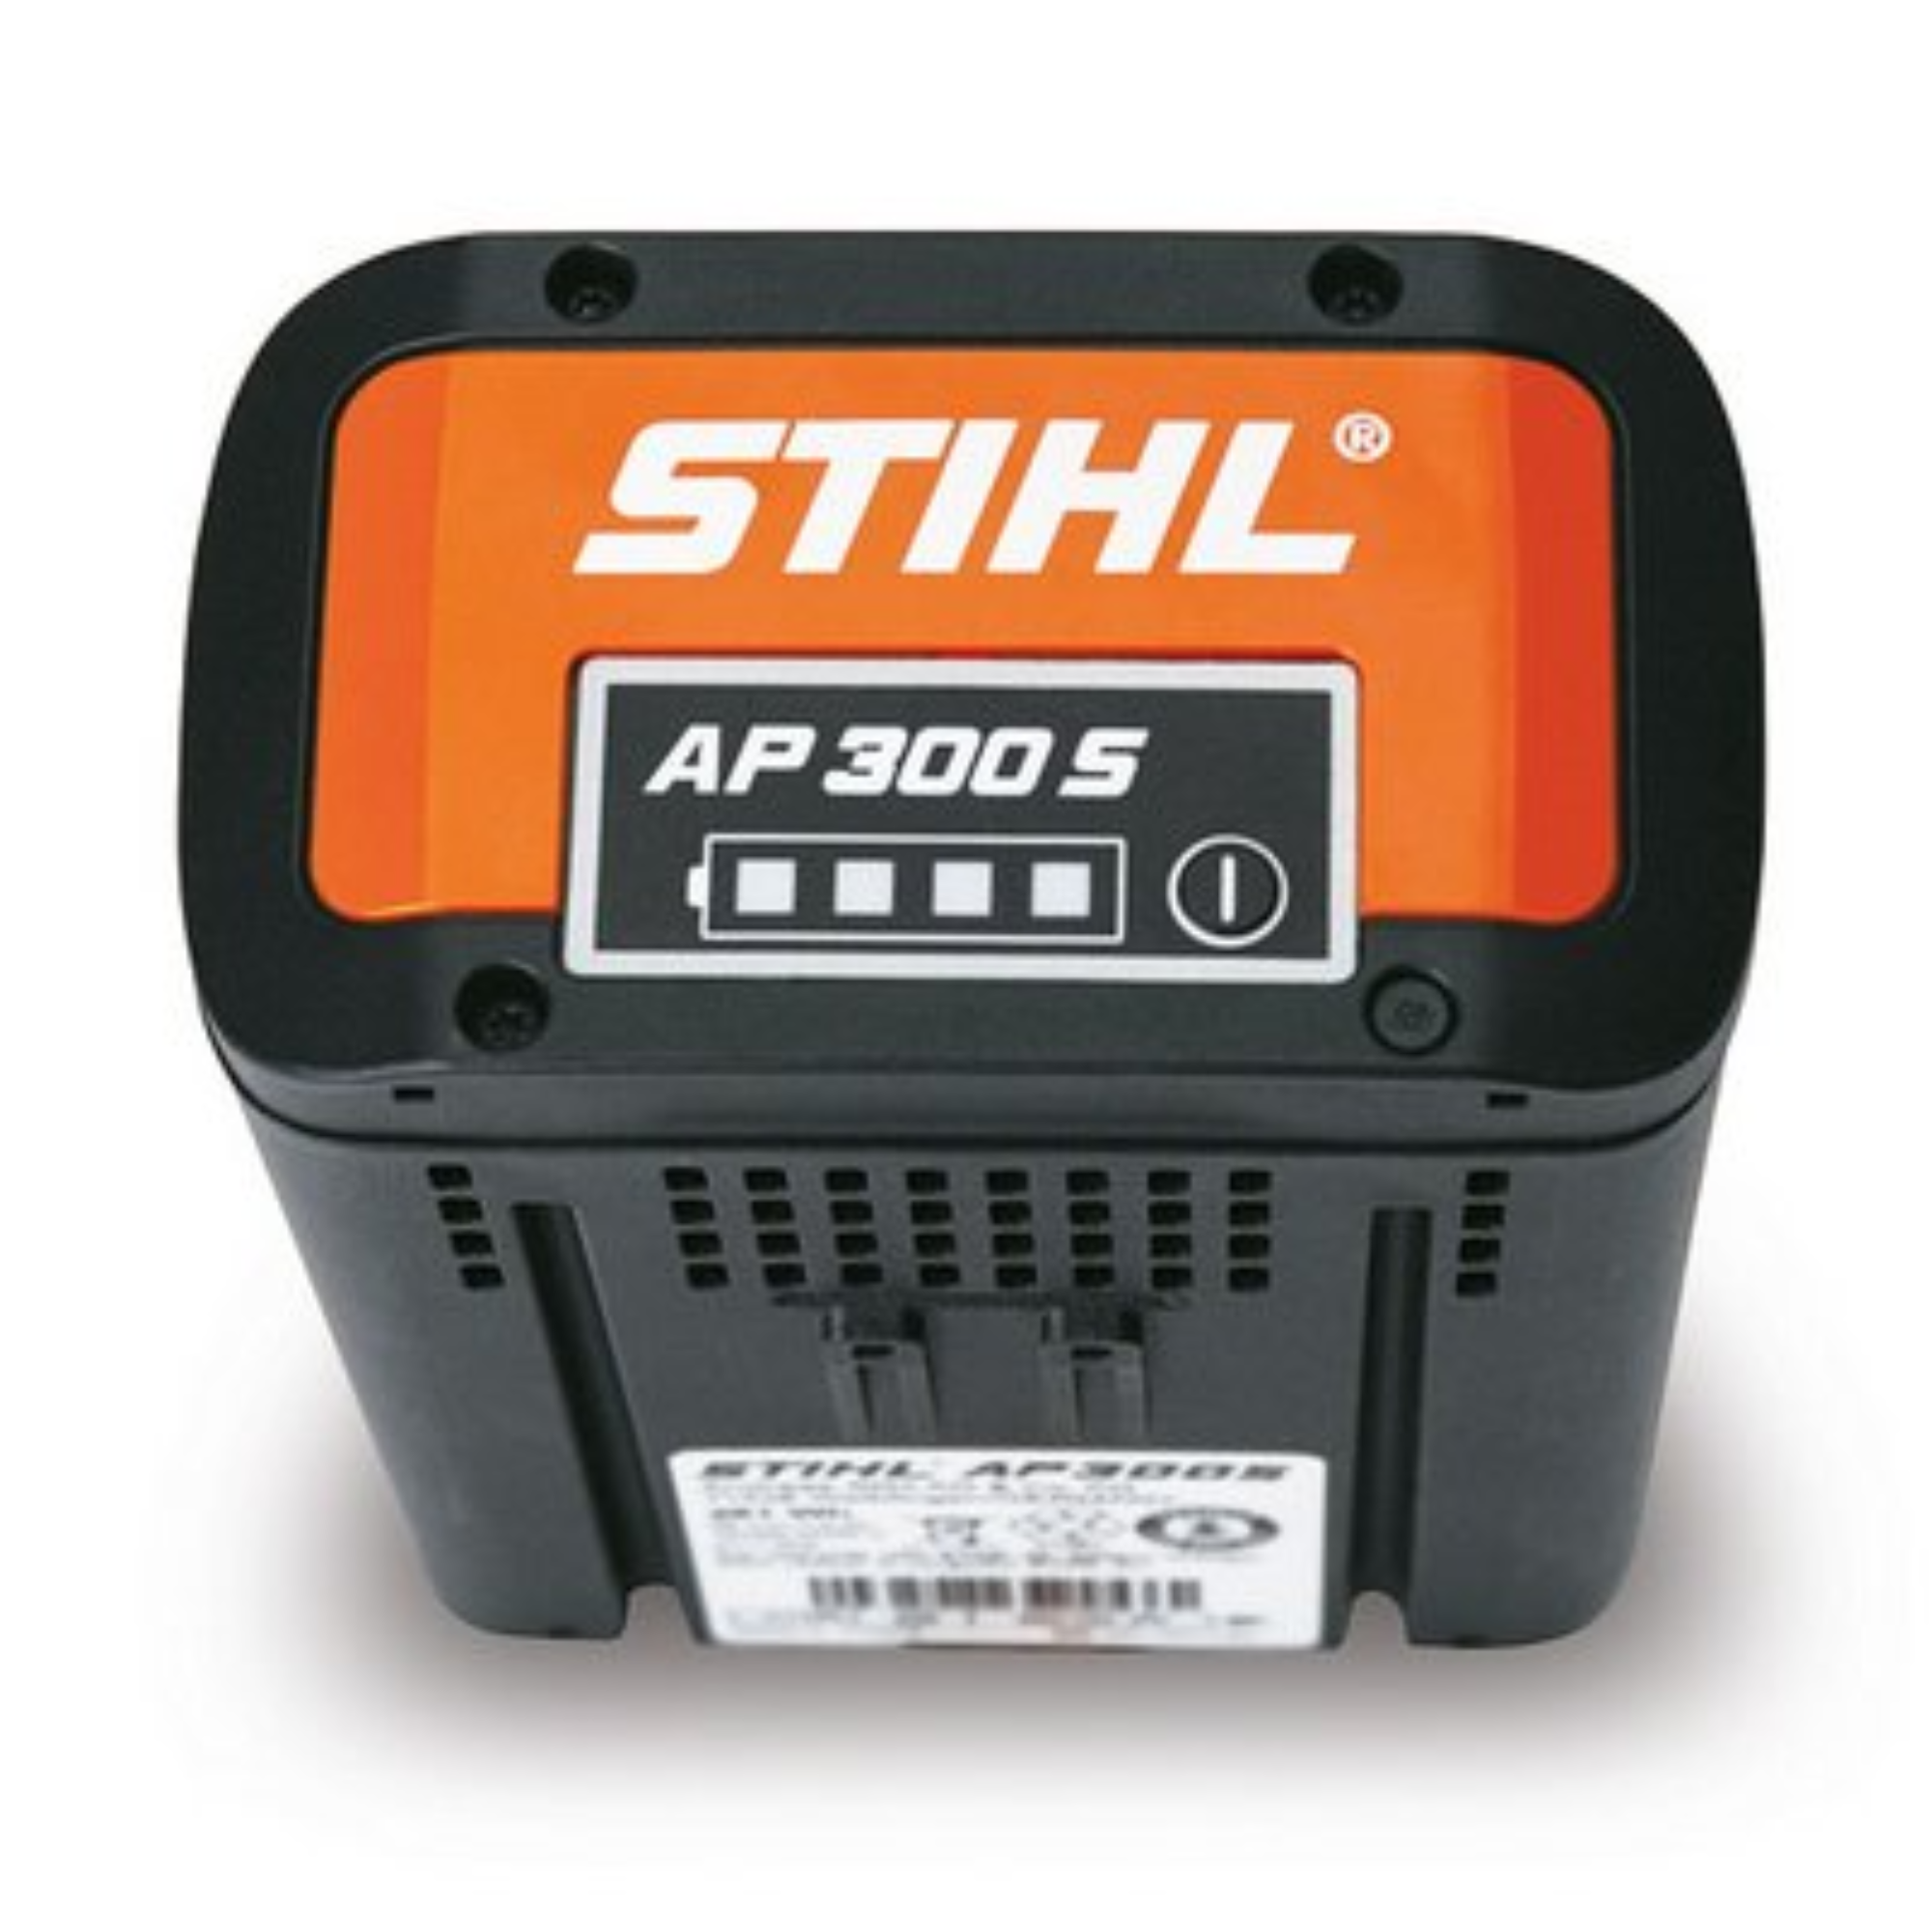 Stihl AP 300 S 36 Volt 7.2 Ah Lithium Ion Battery